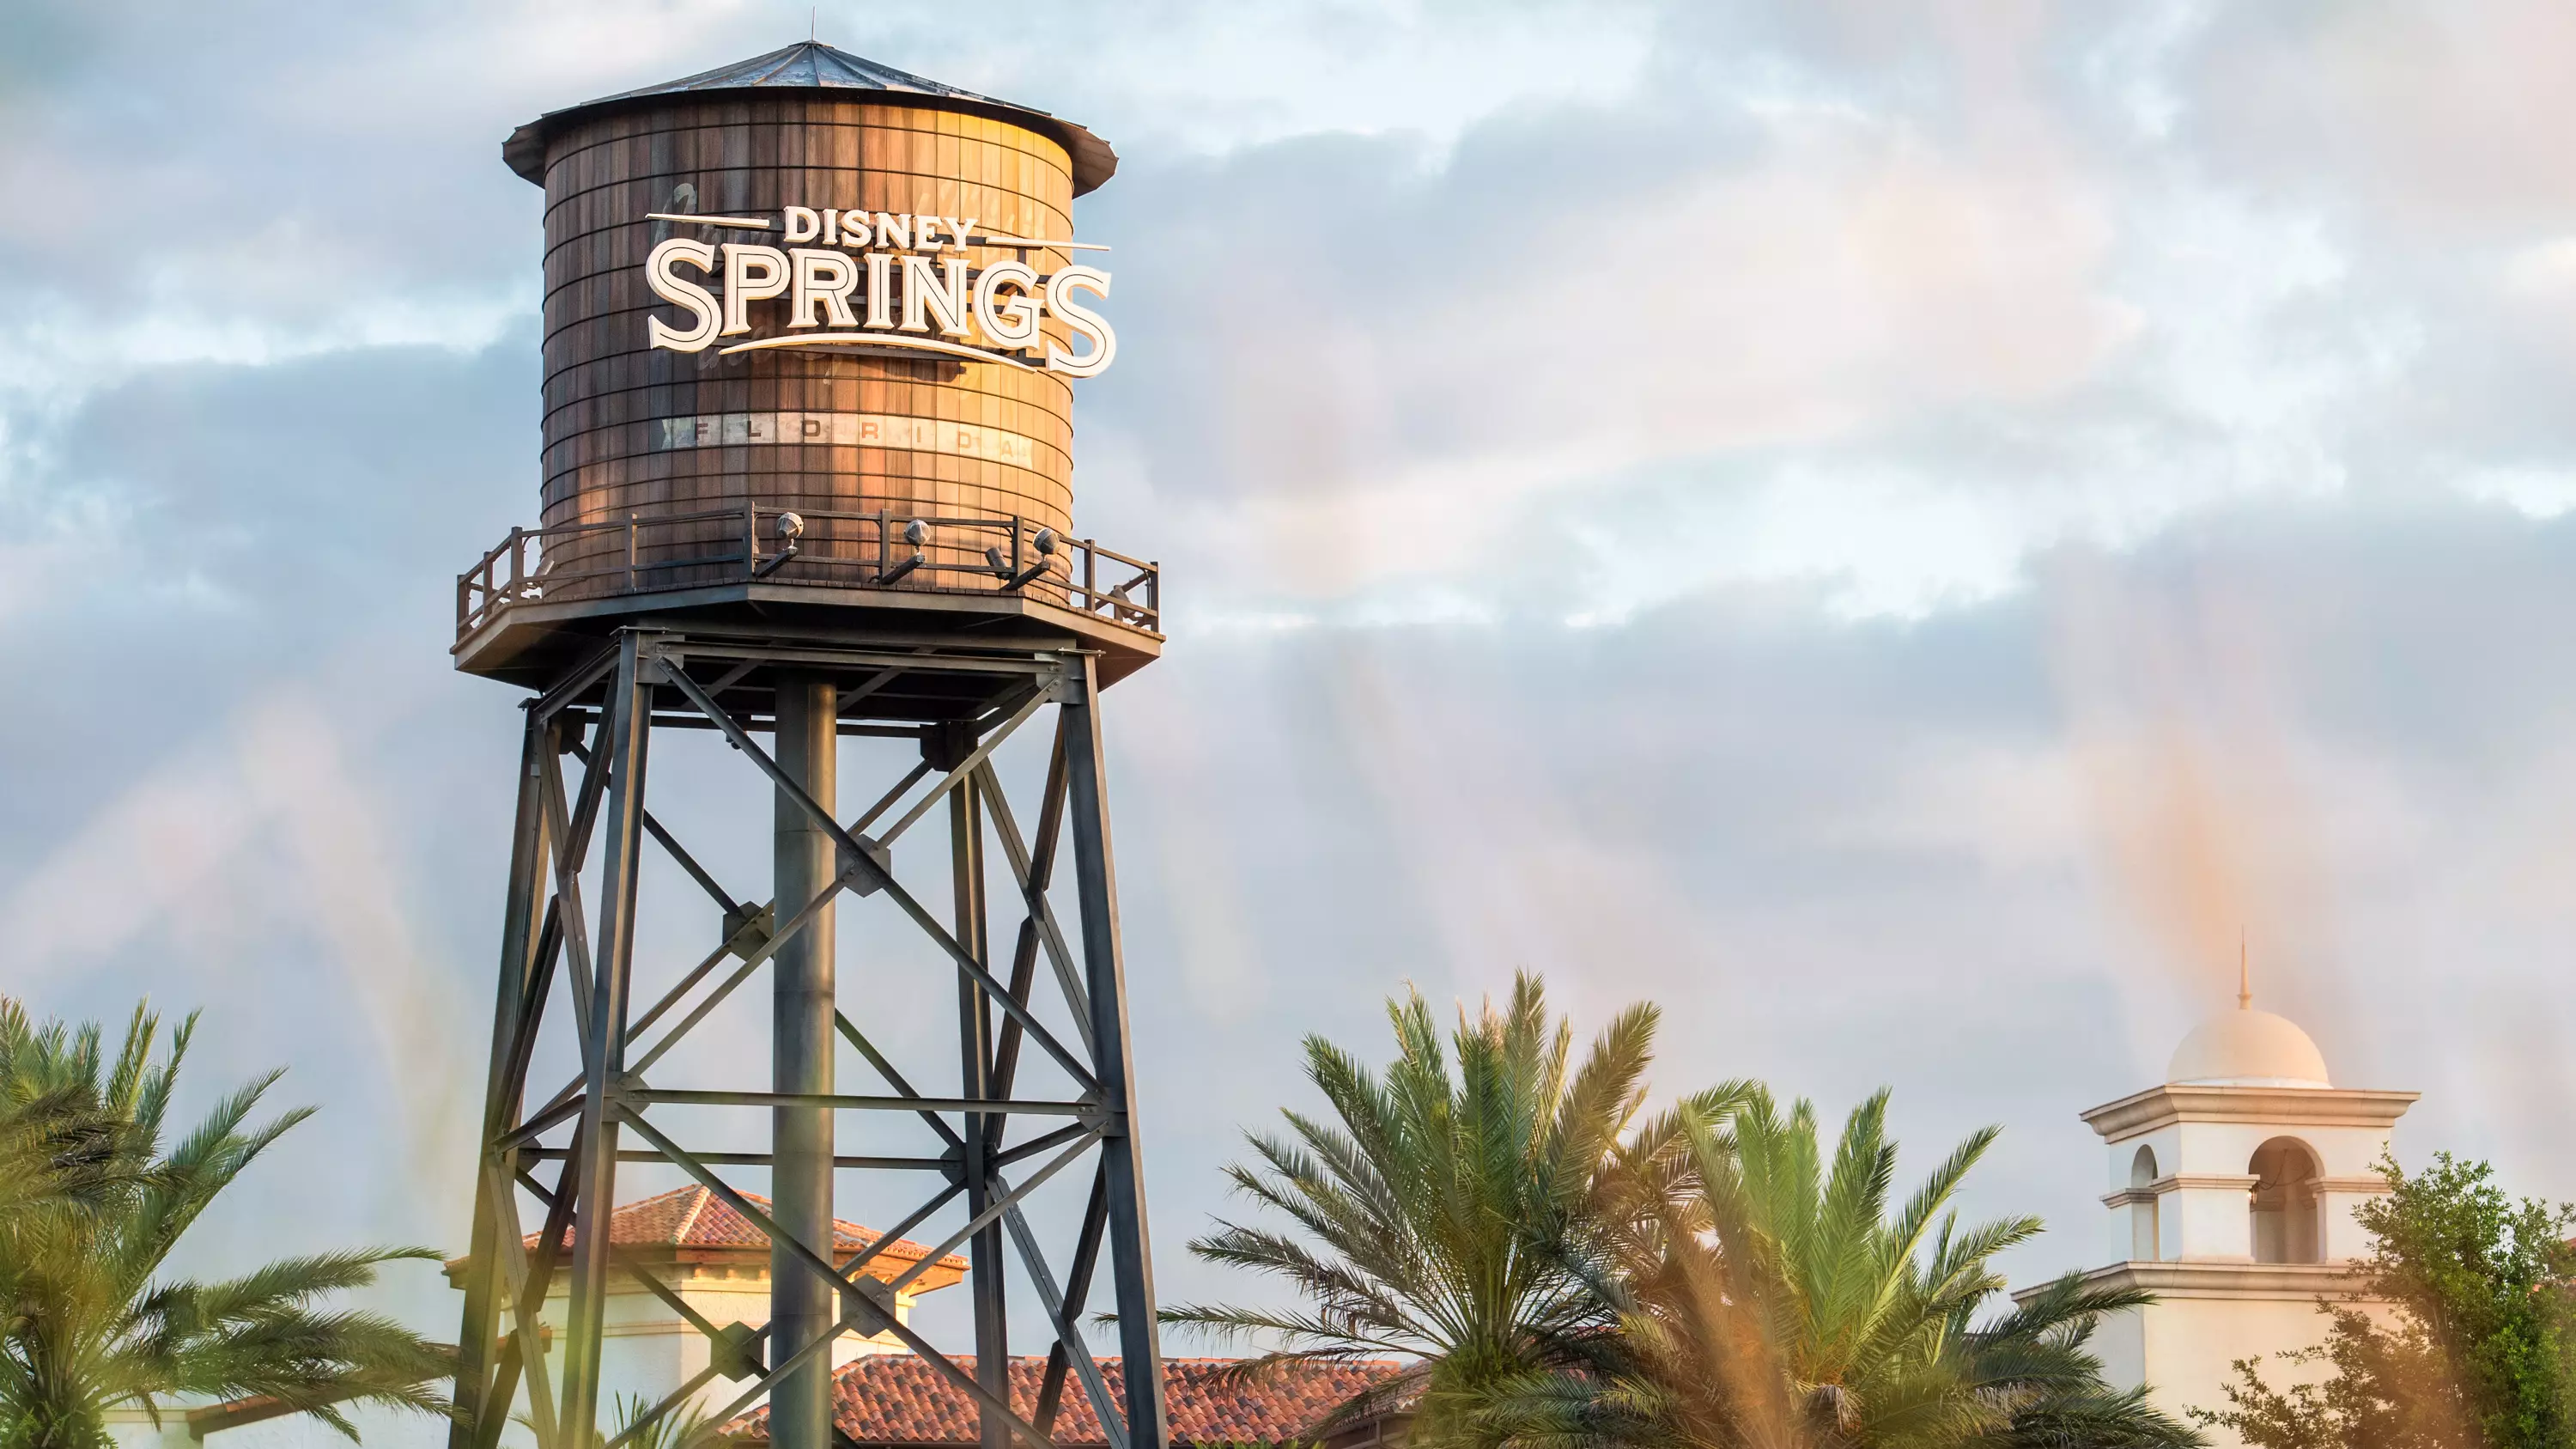 Disney Springs can be found at Disney World Florida (